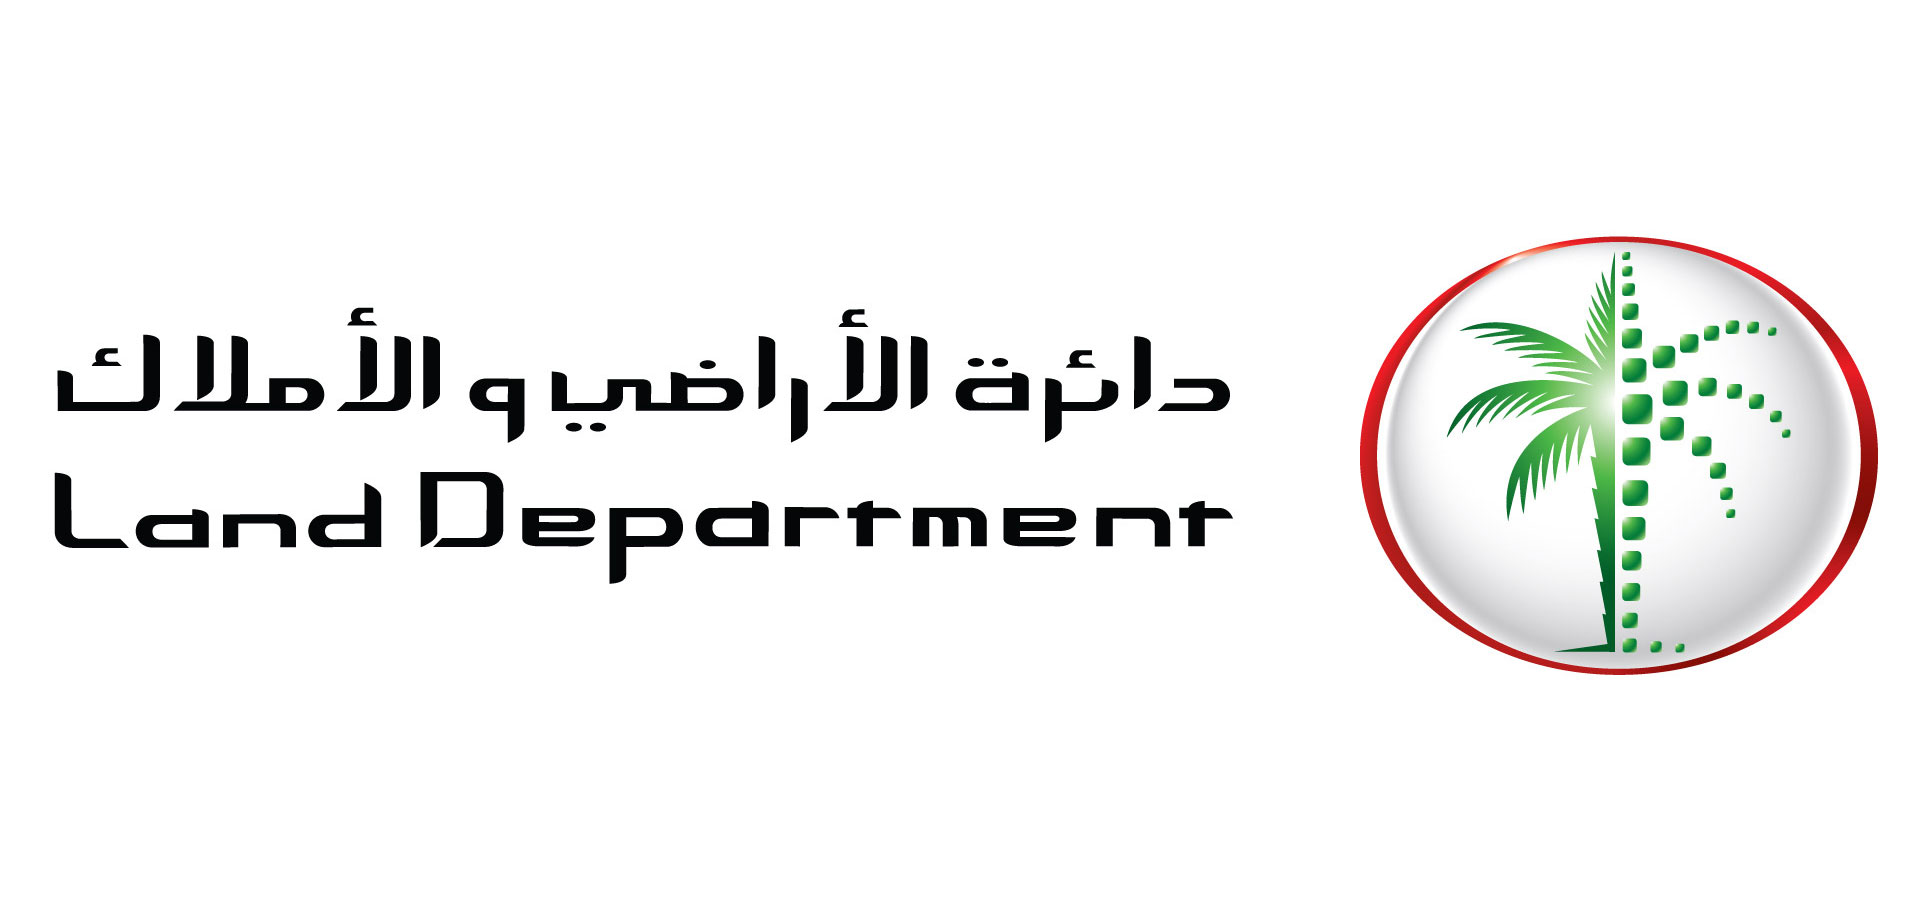 Dubai Land Department introduces remote property registration system